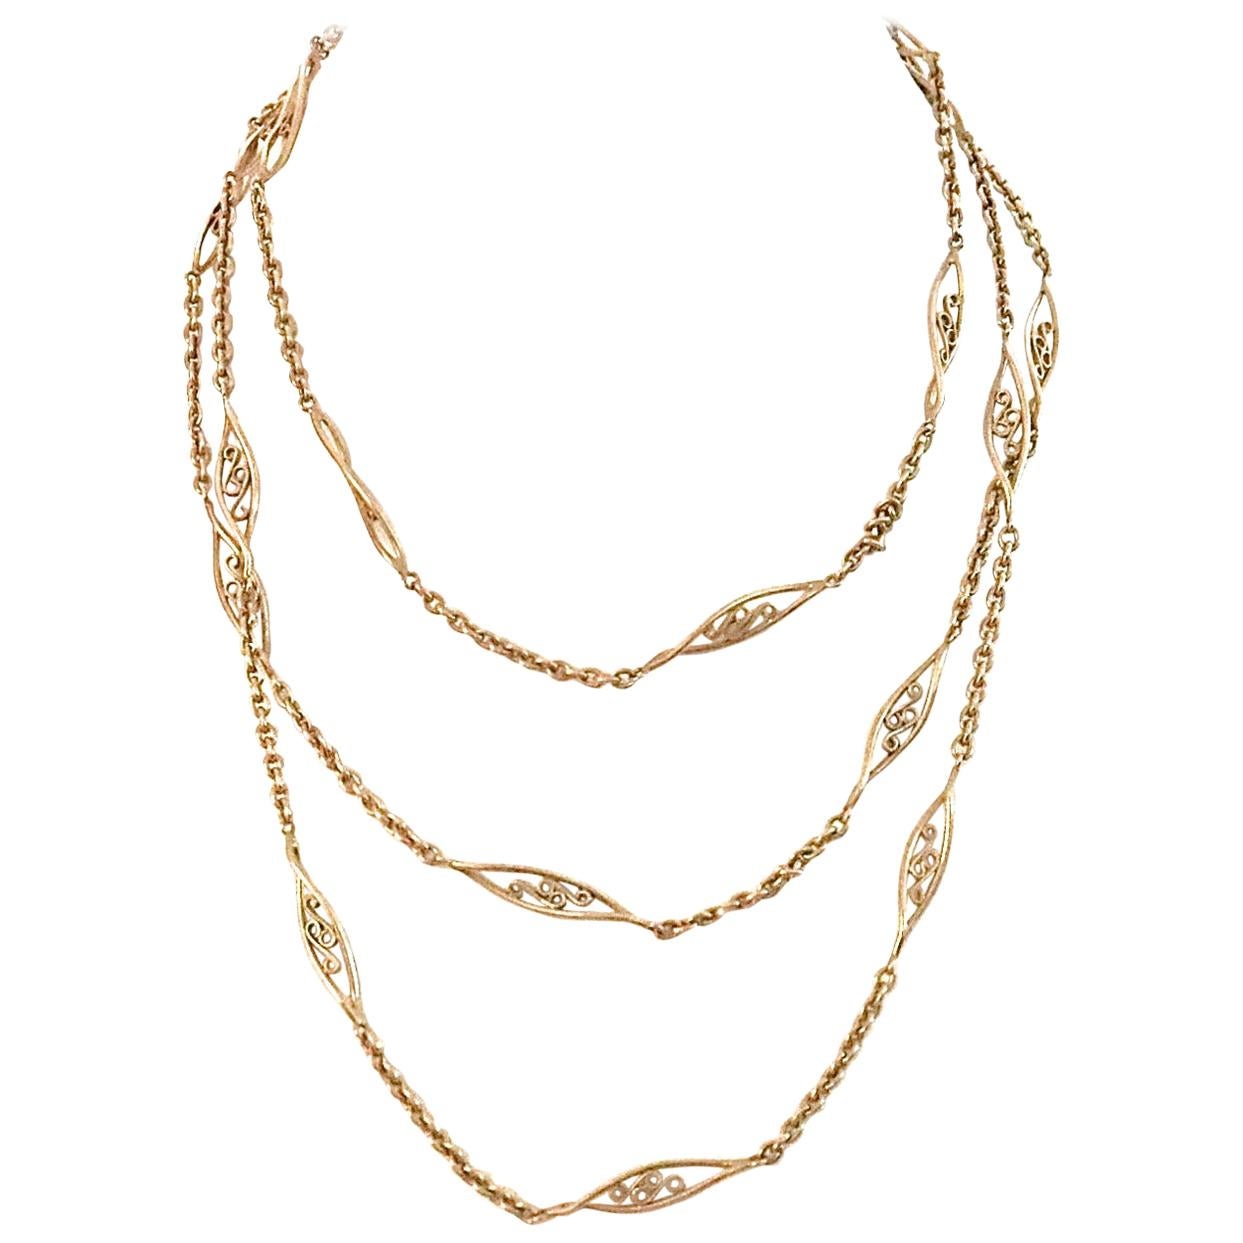 French Antique 18 Karat Gold Necklace